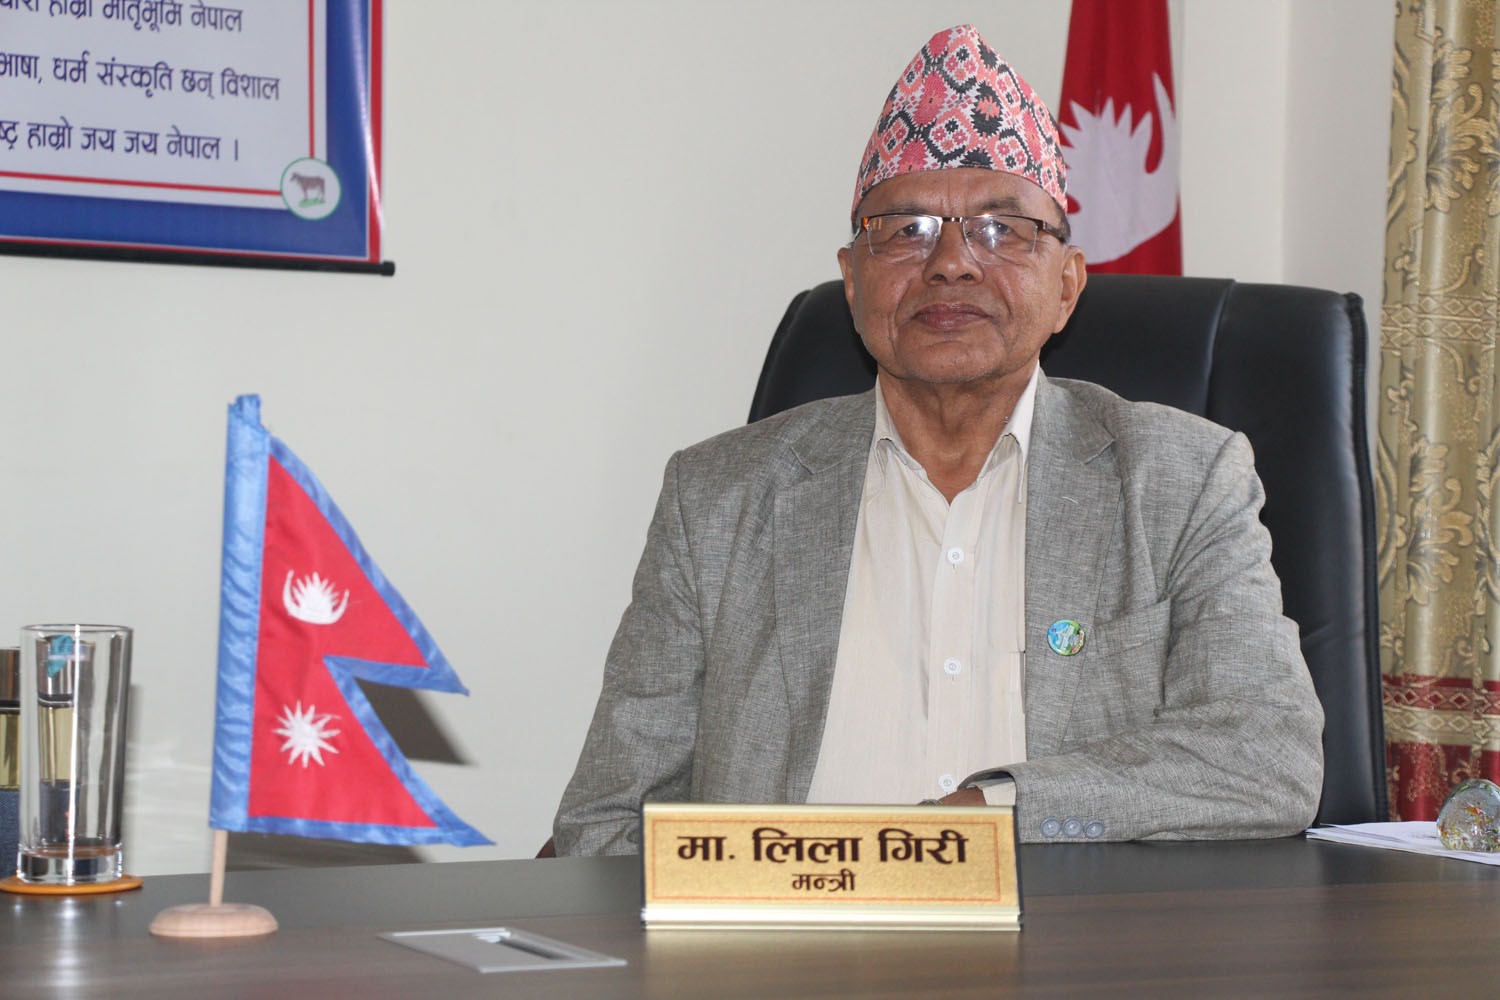 Lumbini Times | Nepal's Independent News Portal.